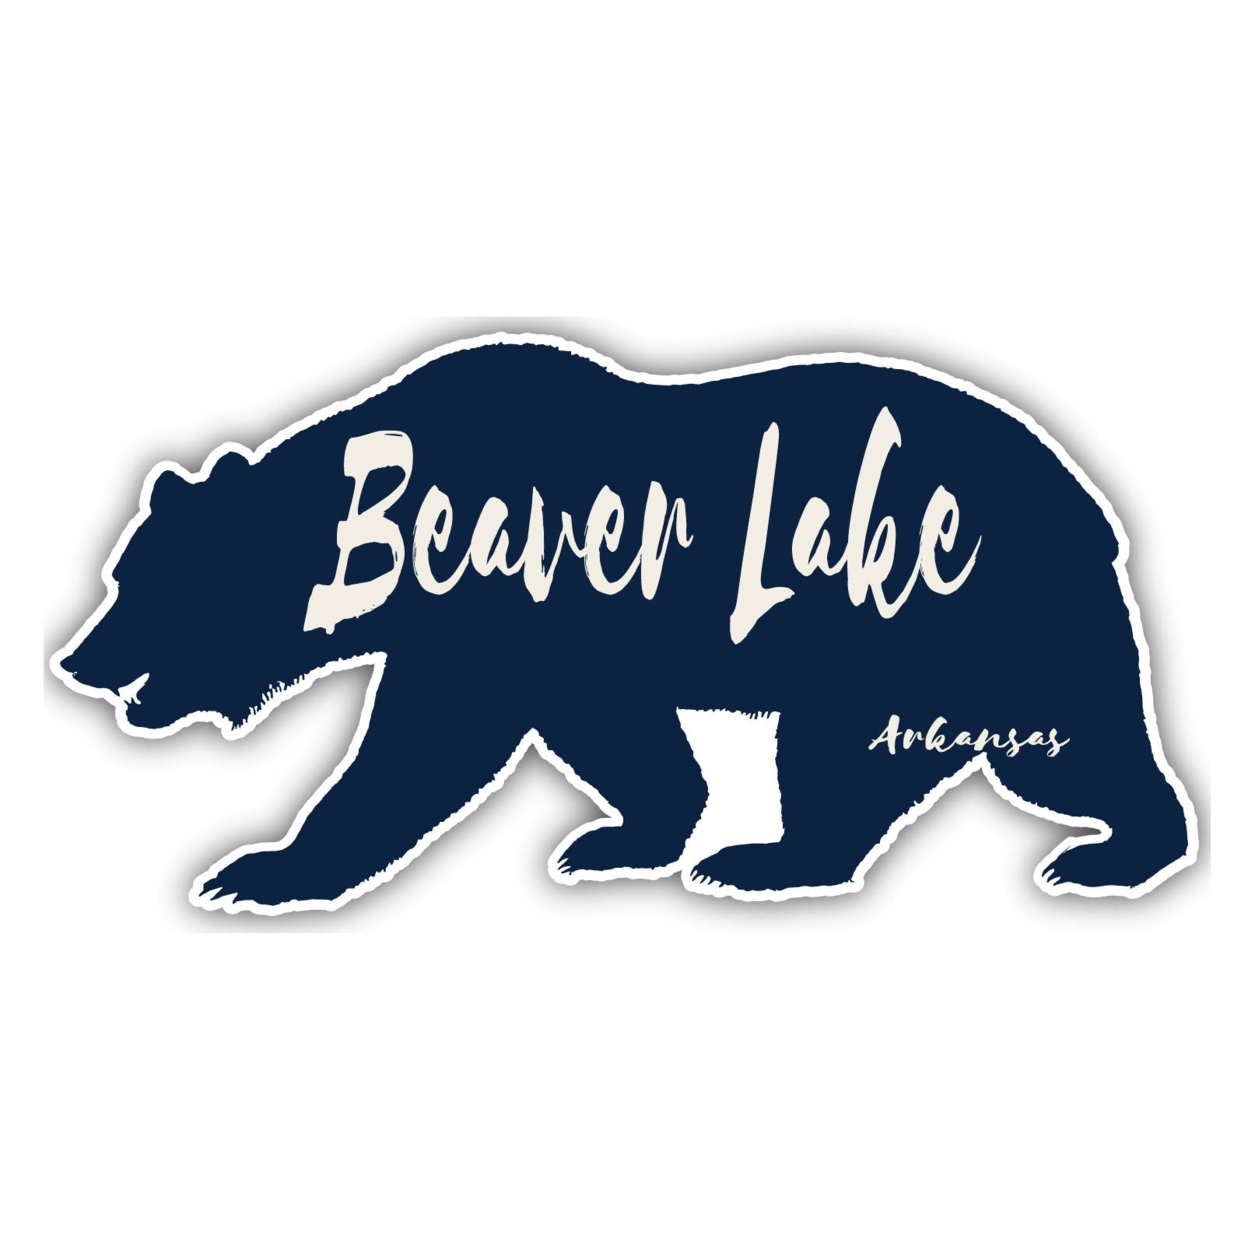 Beaver Lake Arkansas Souvenir Decorative Stickers (Choose Theme And Size) - Single Unit, 8-Inch, Adventures Awaits